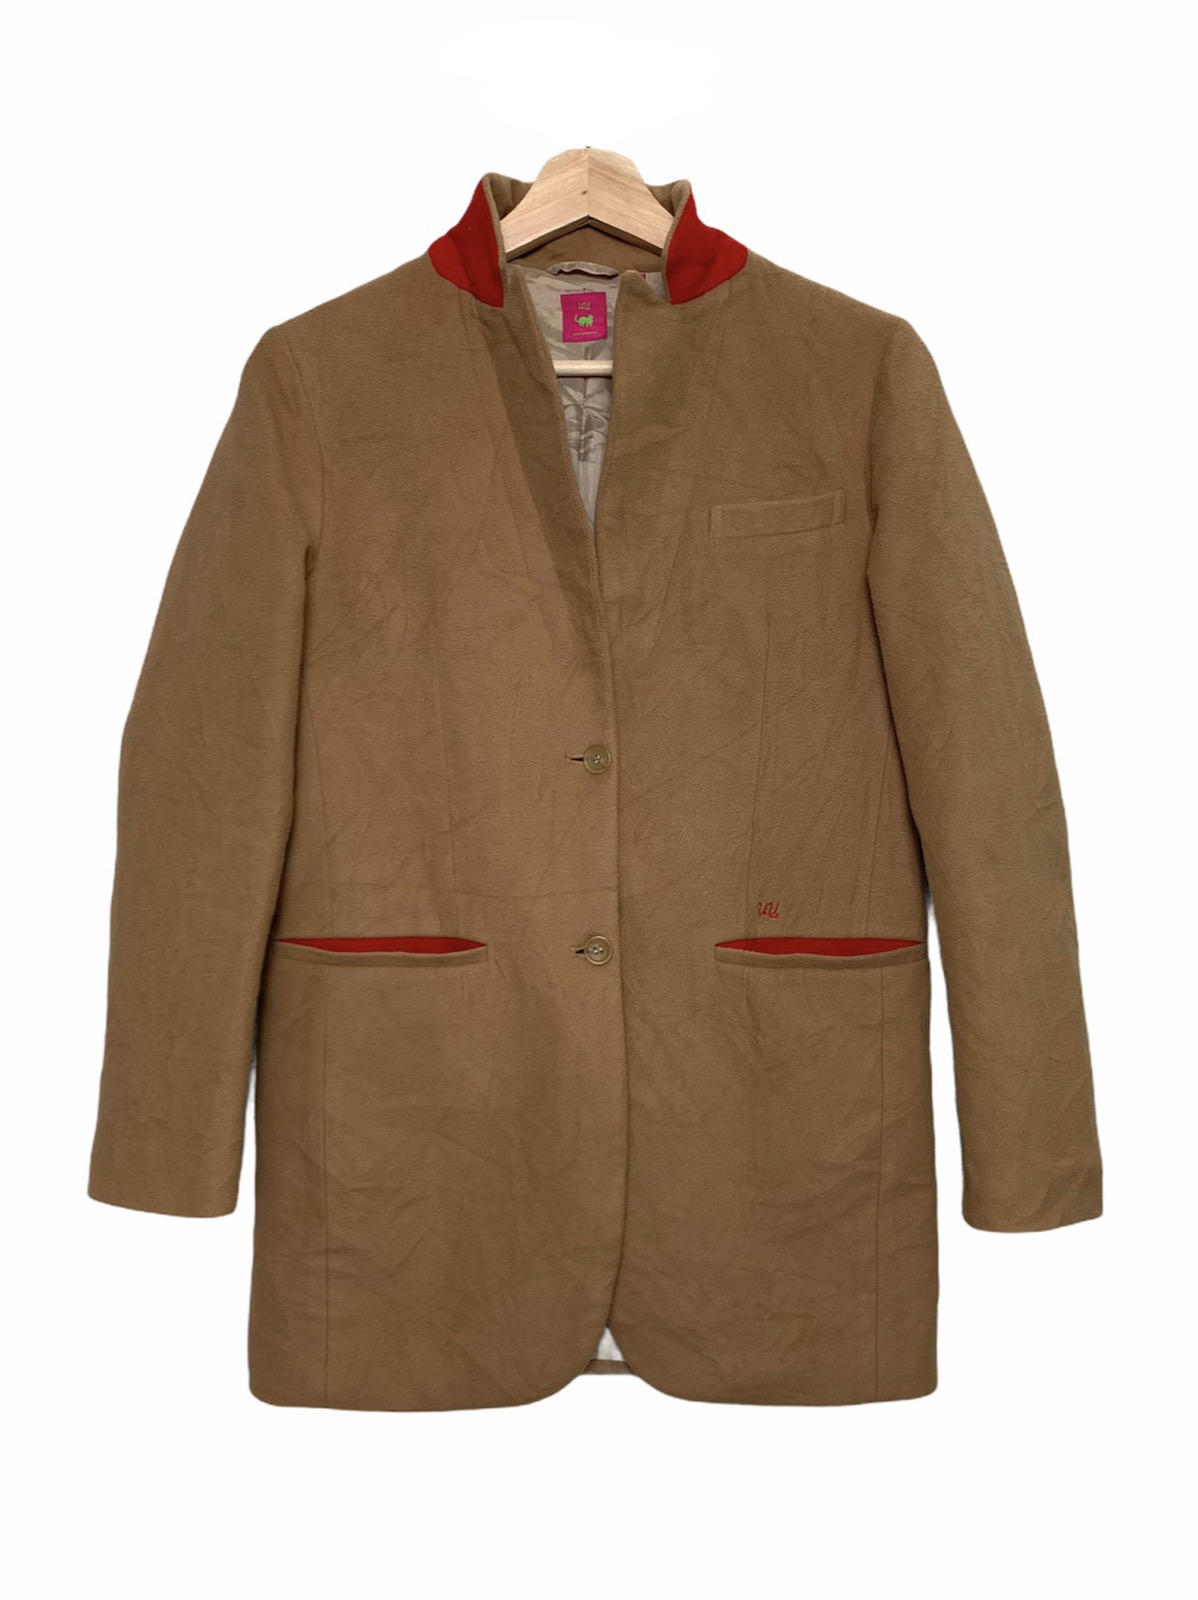 Uniqlo x Undercover Fleece Jacket/Coat - 1